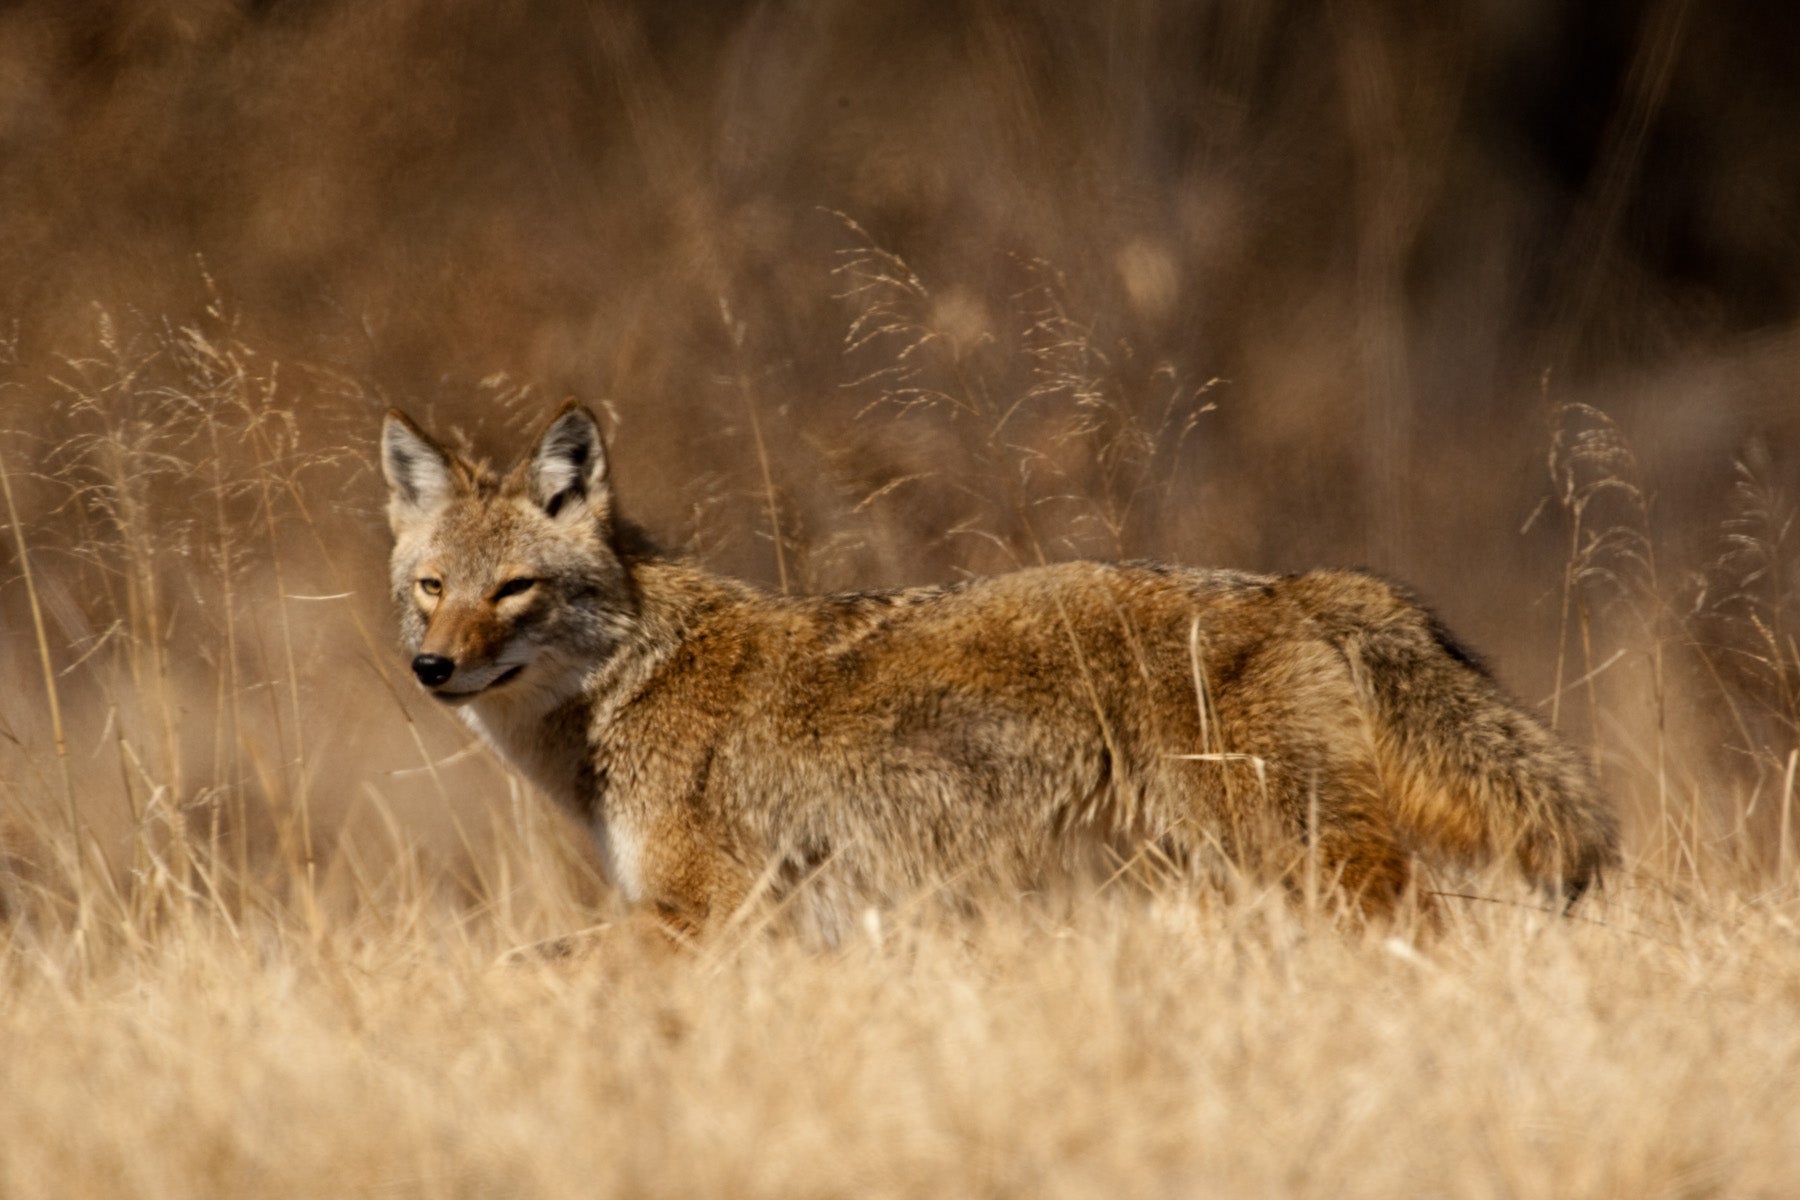 coyote walking through grassland